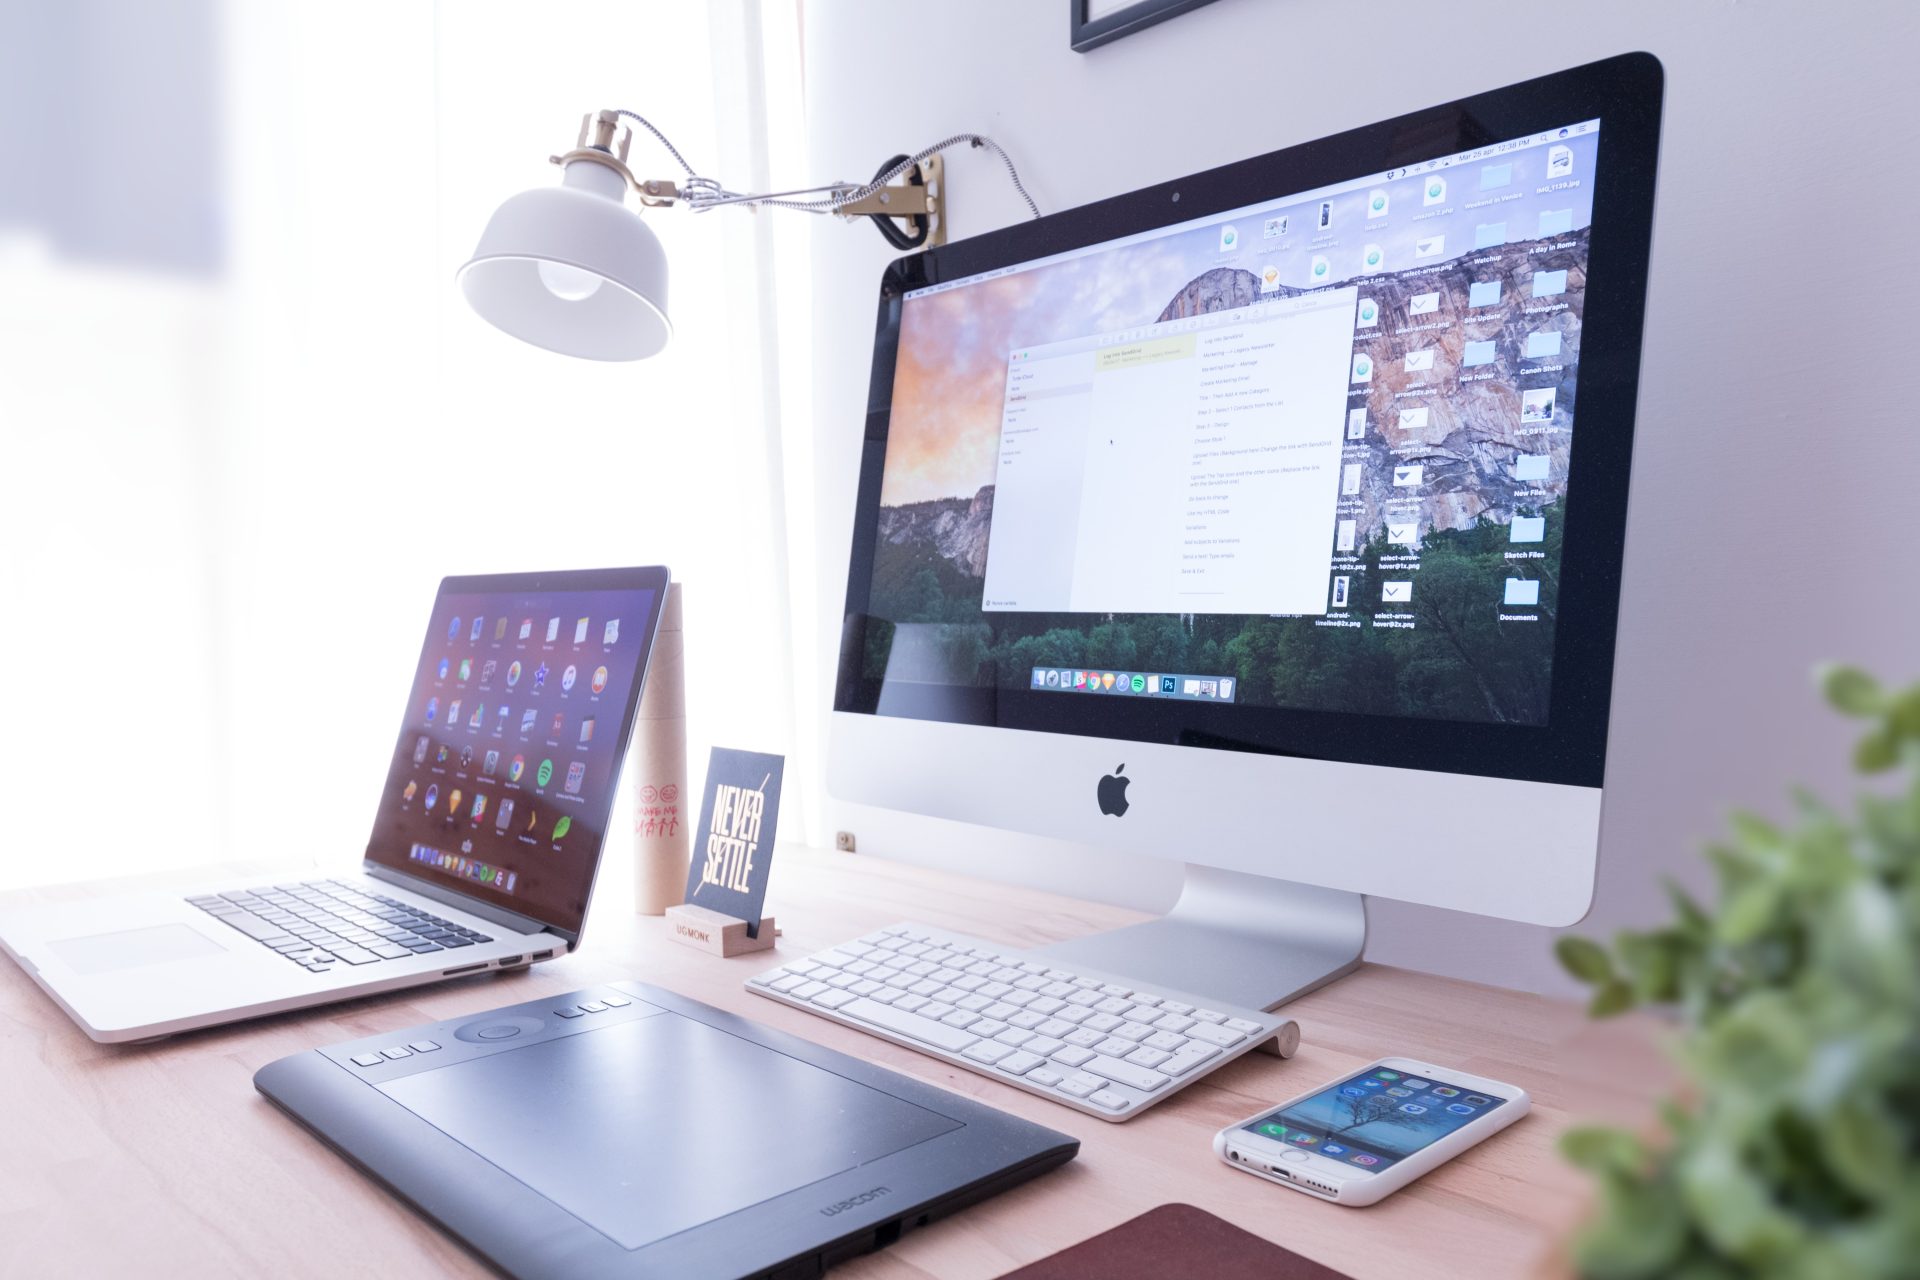 imac, iphone, ipad, macbook on desk